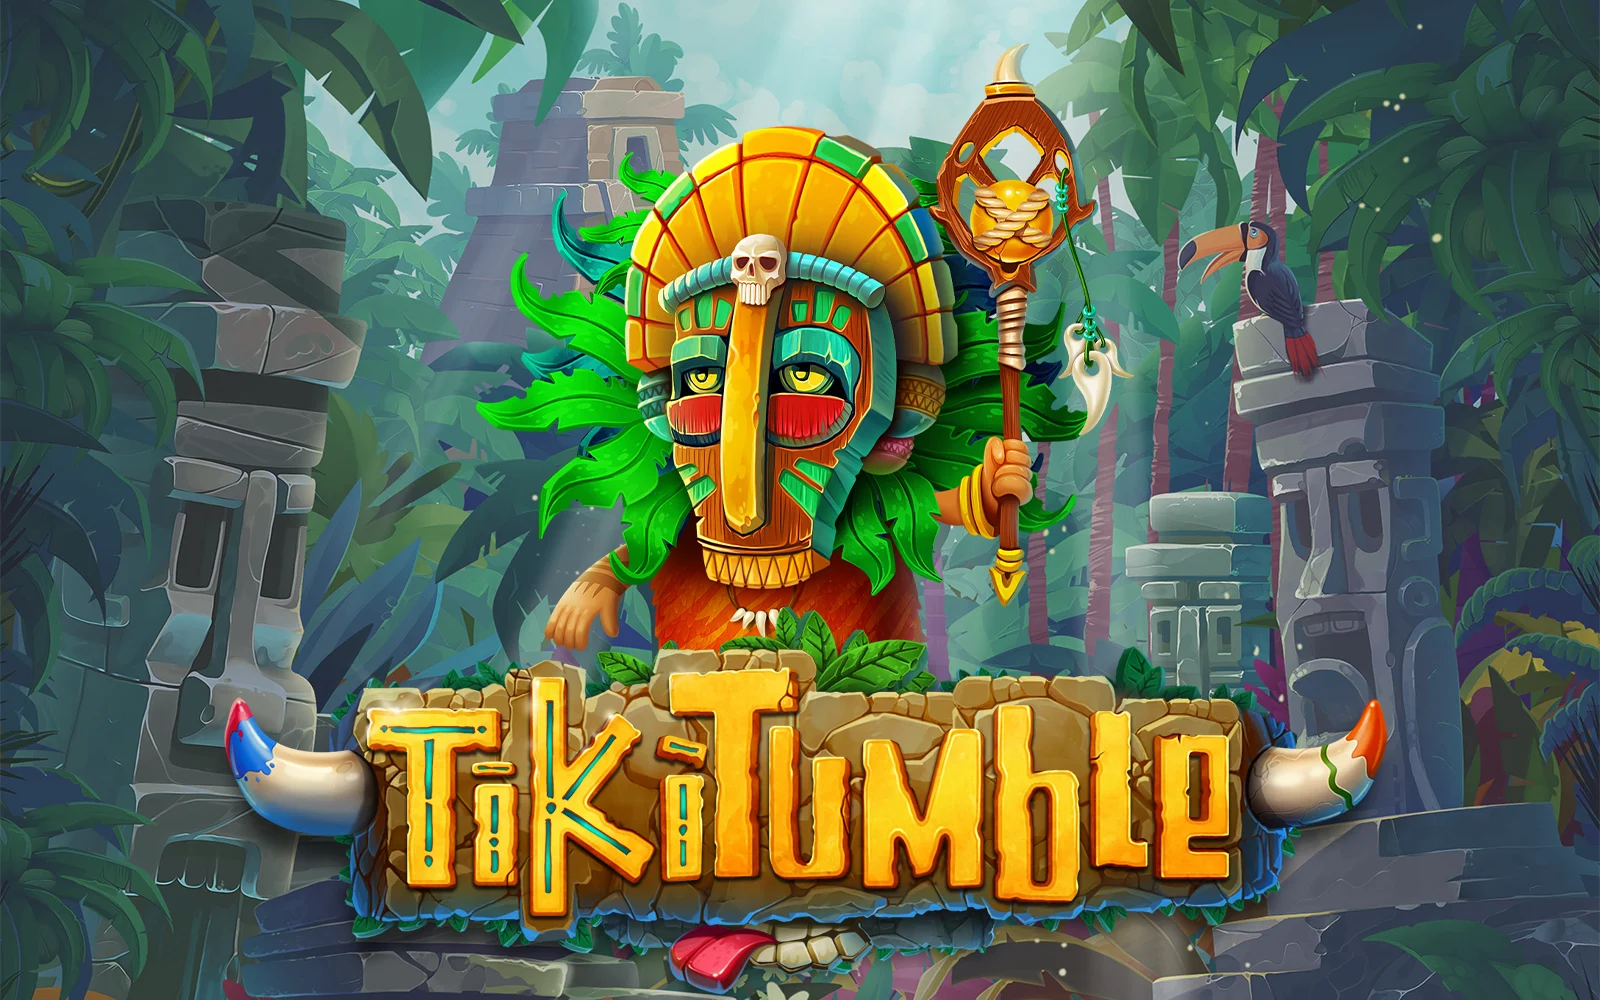 Play Tiki Tumble on Starcasino.be online casino